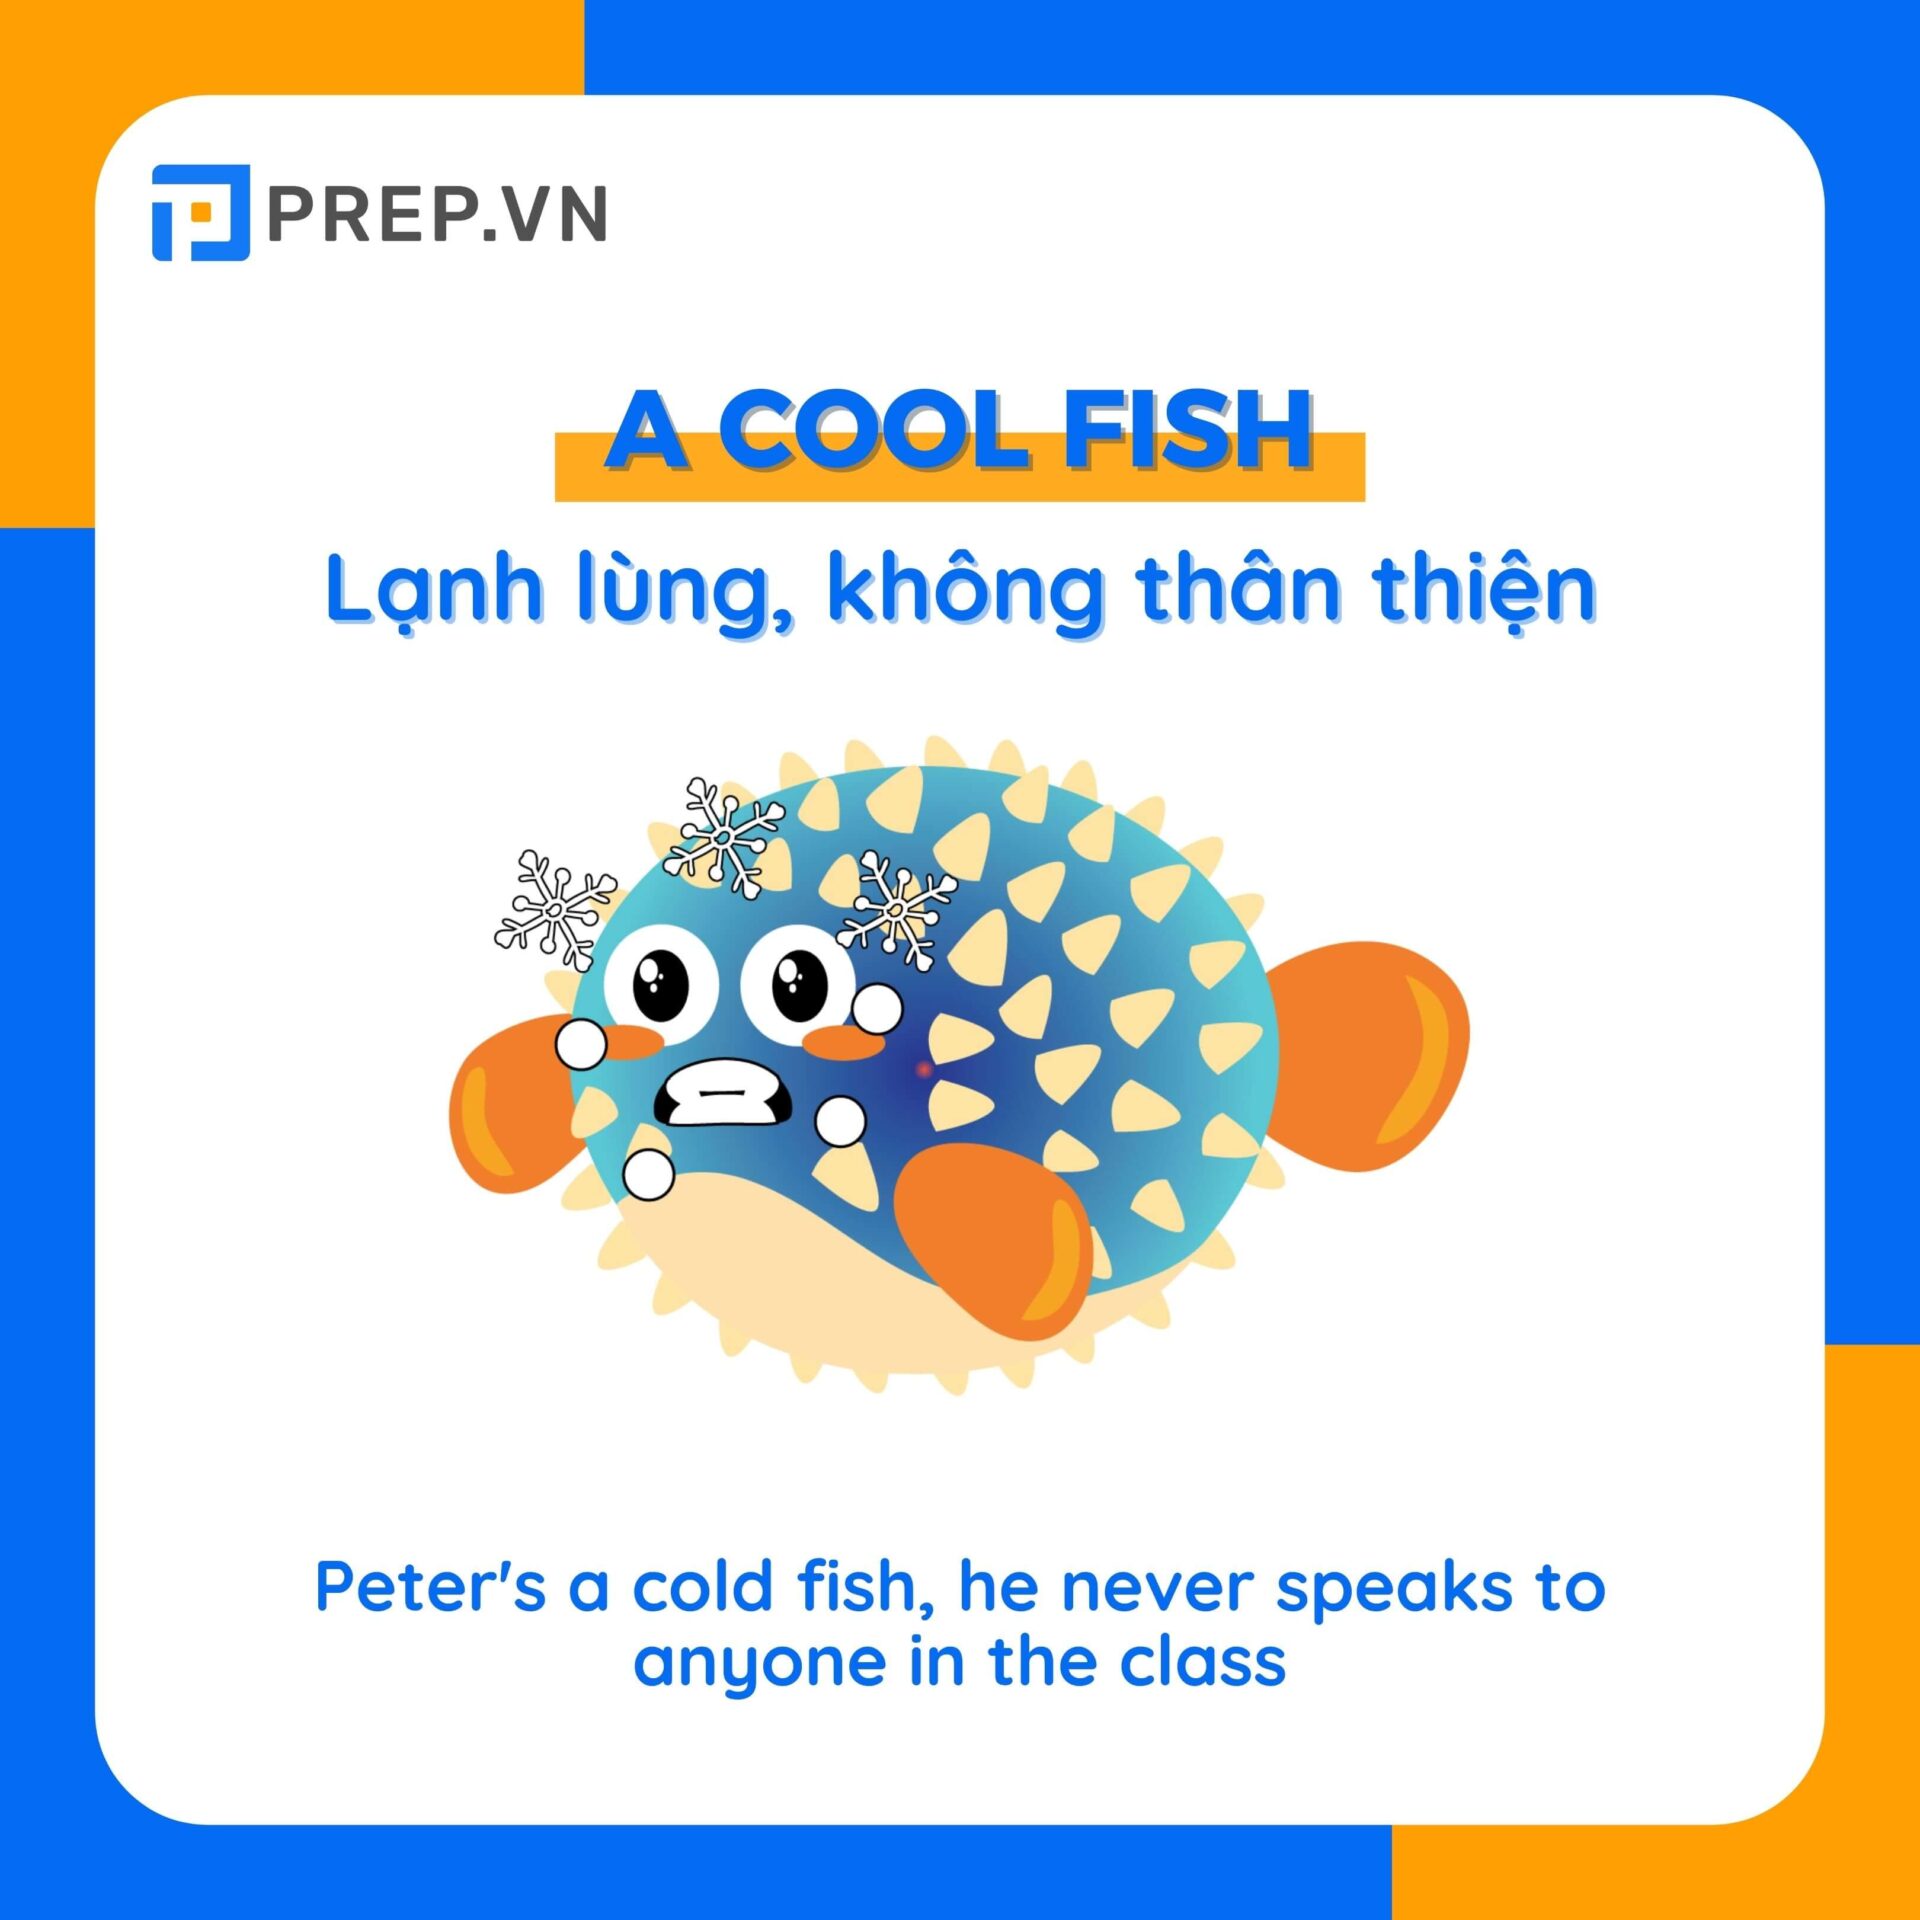 A cool fish